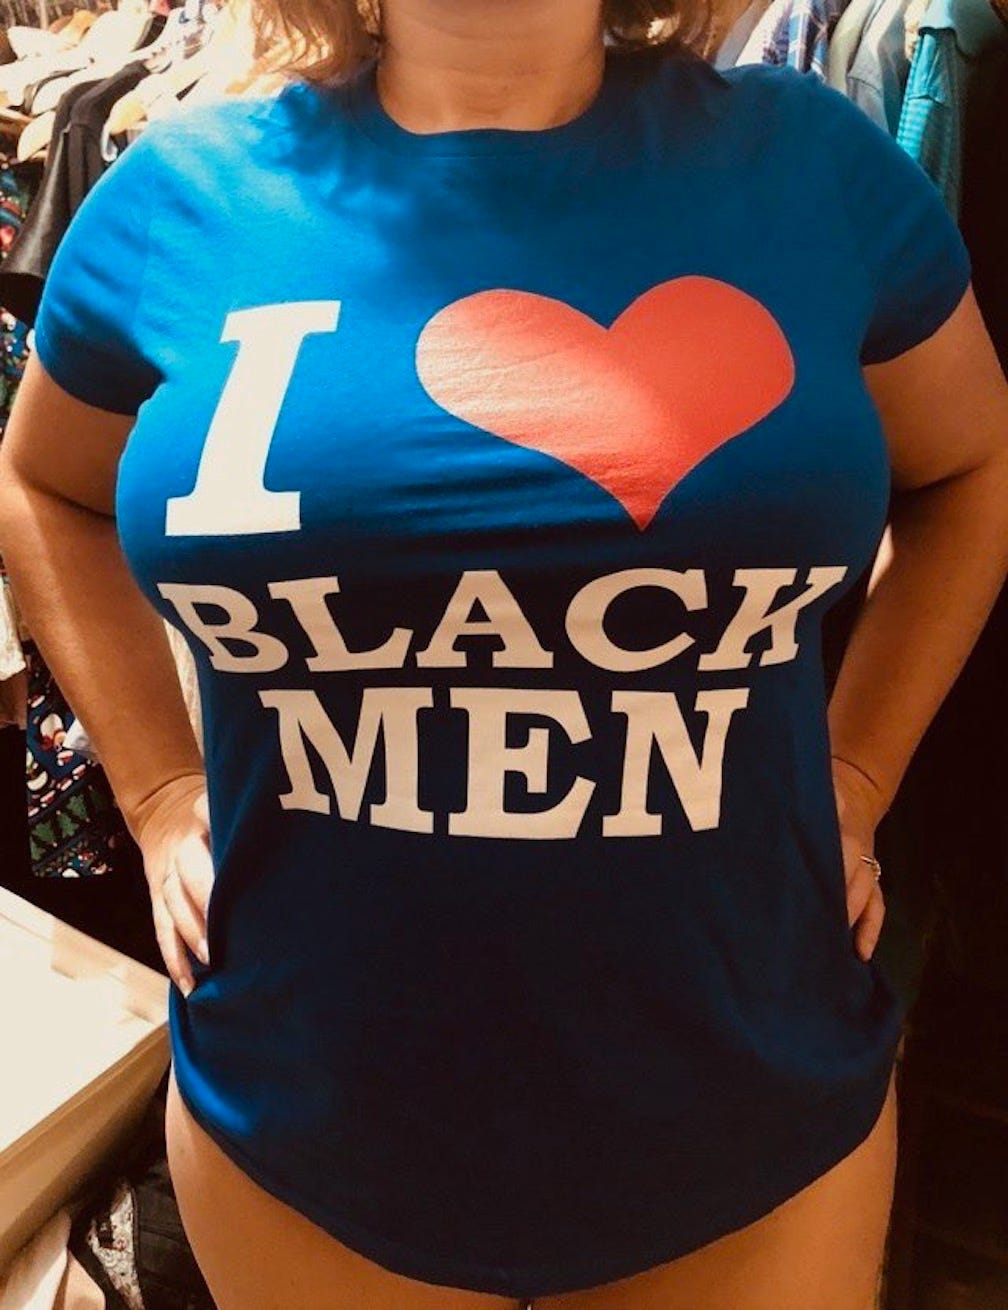 my wifes black cock addiction